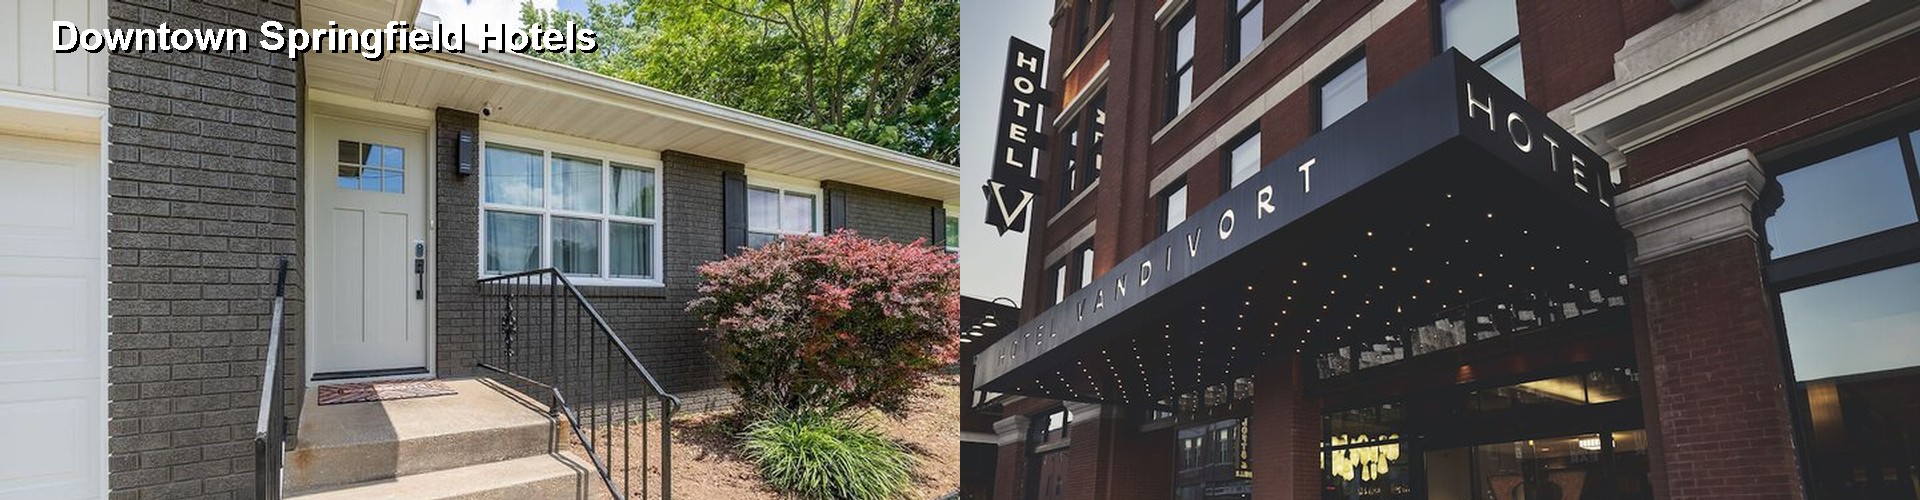 5 Best Hotels near Downtown Springfield